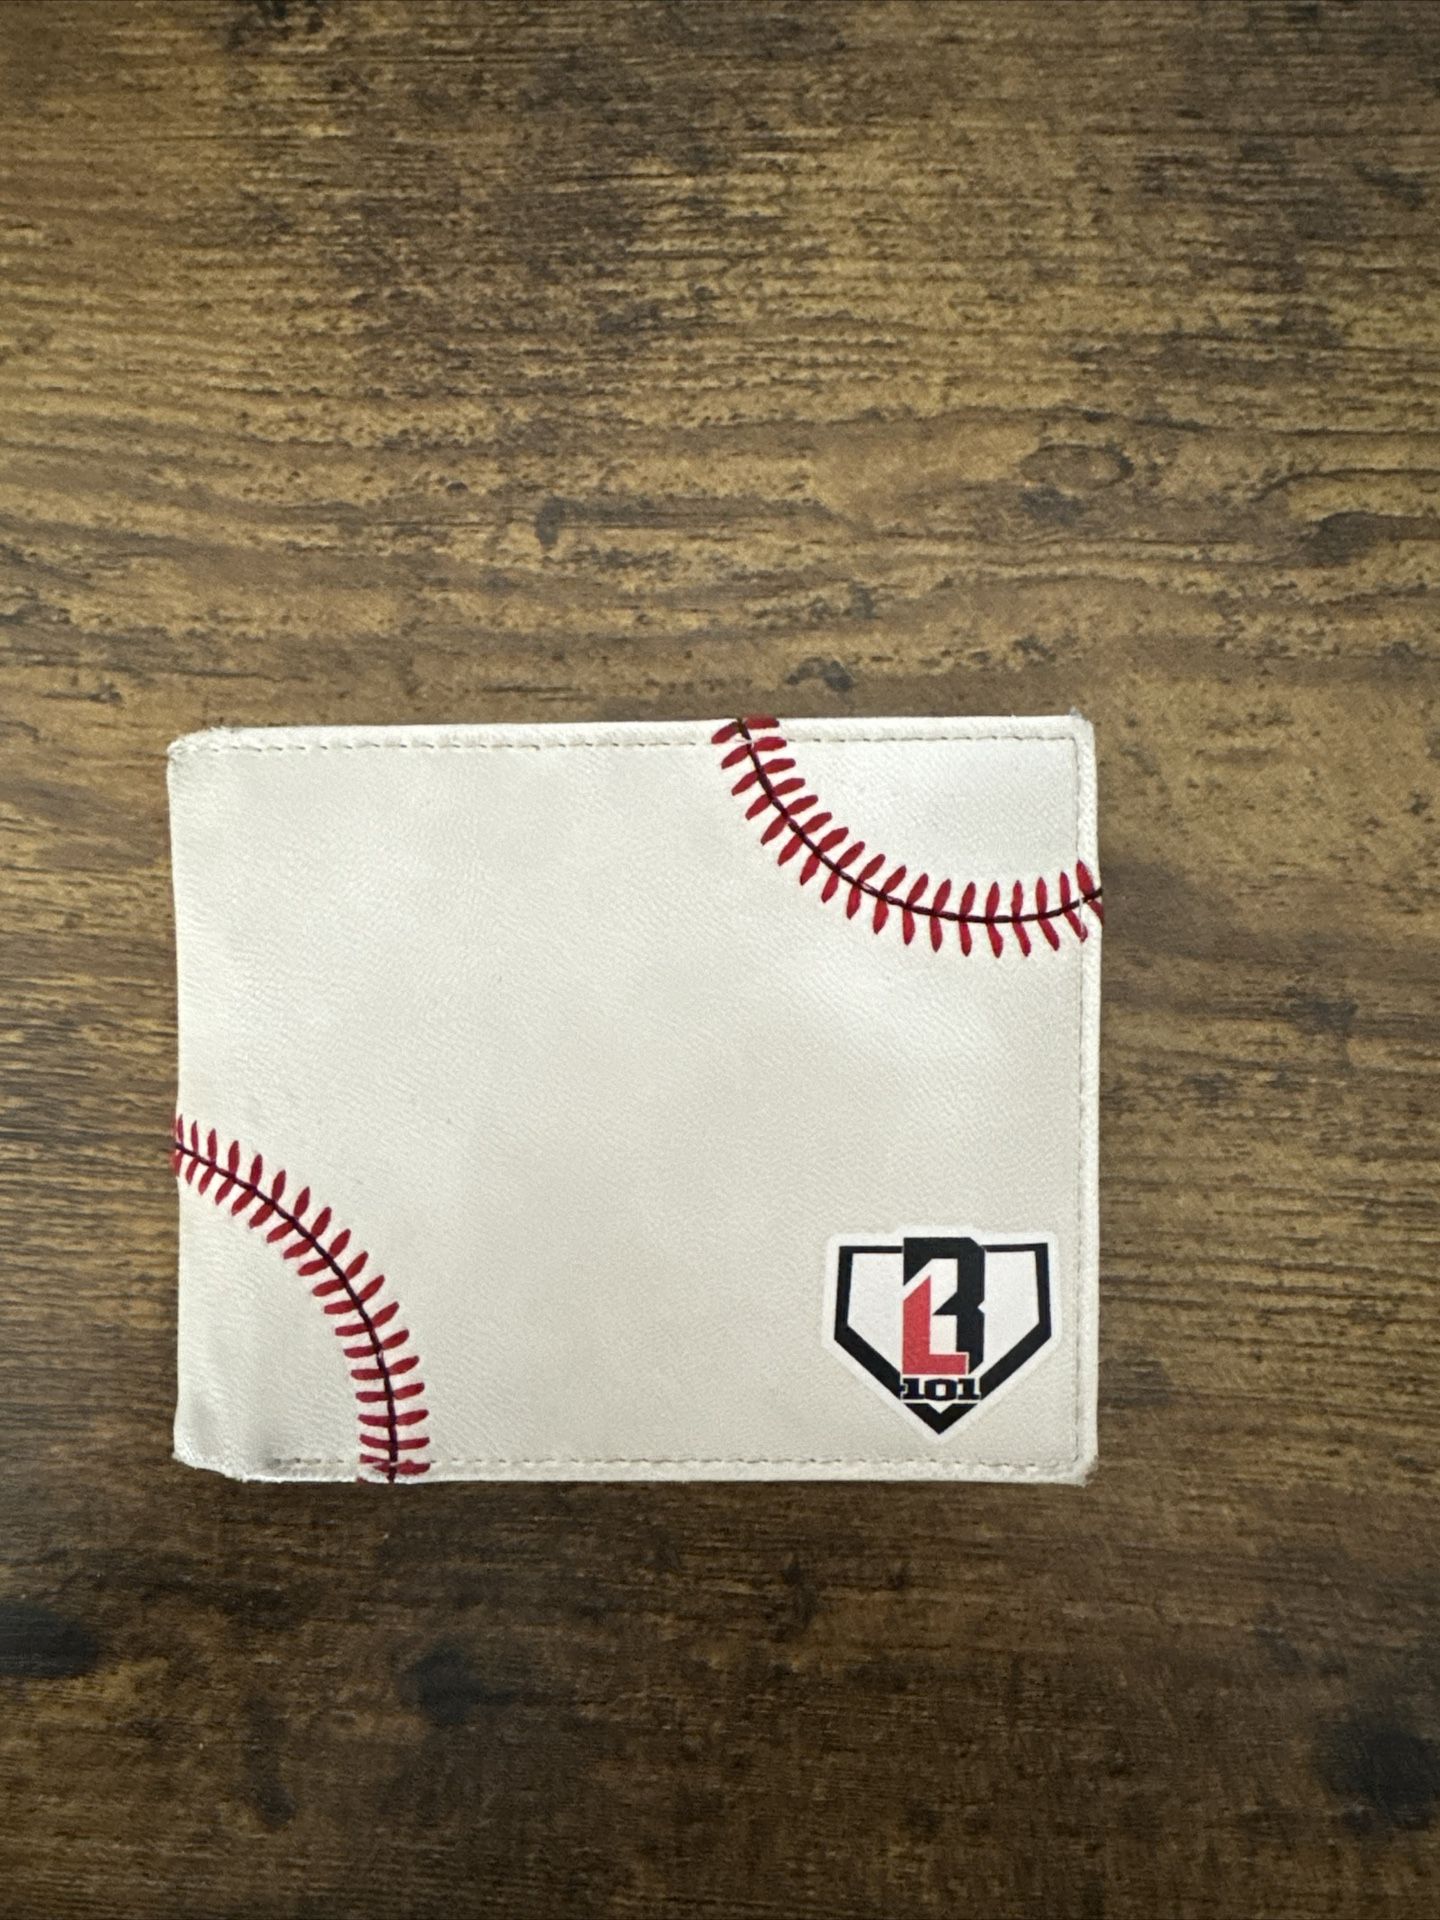 Baseball Lifestyle 101 Wallet